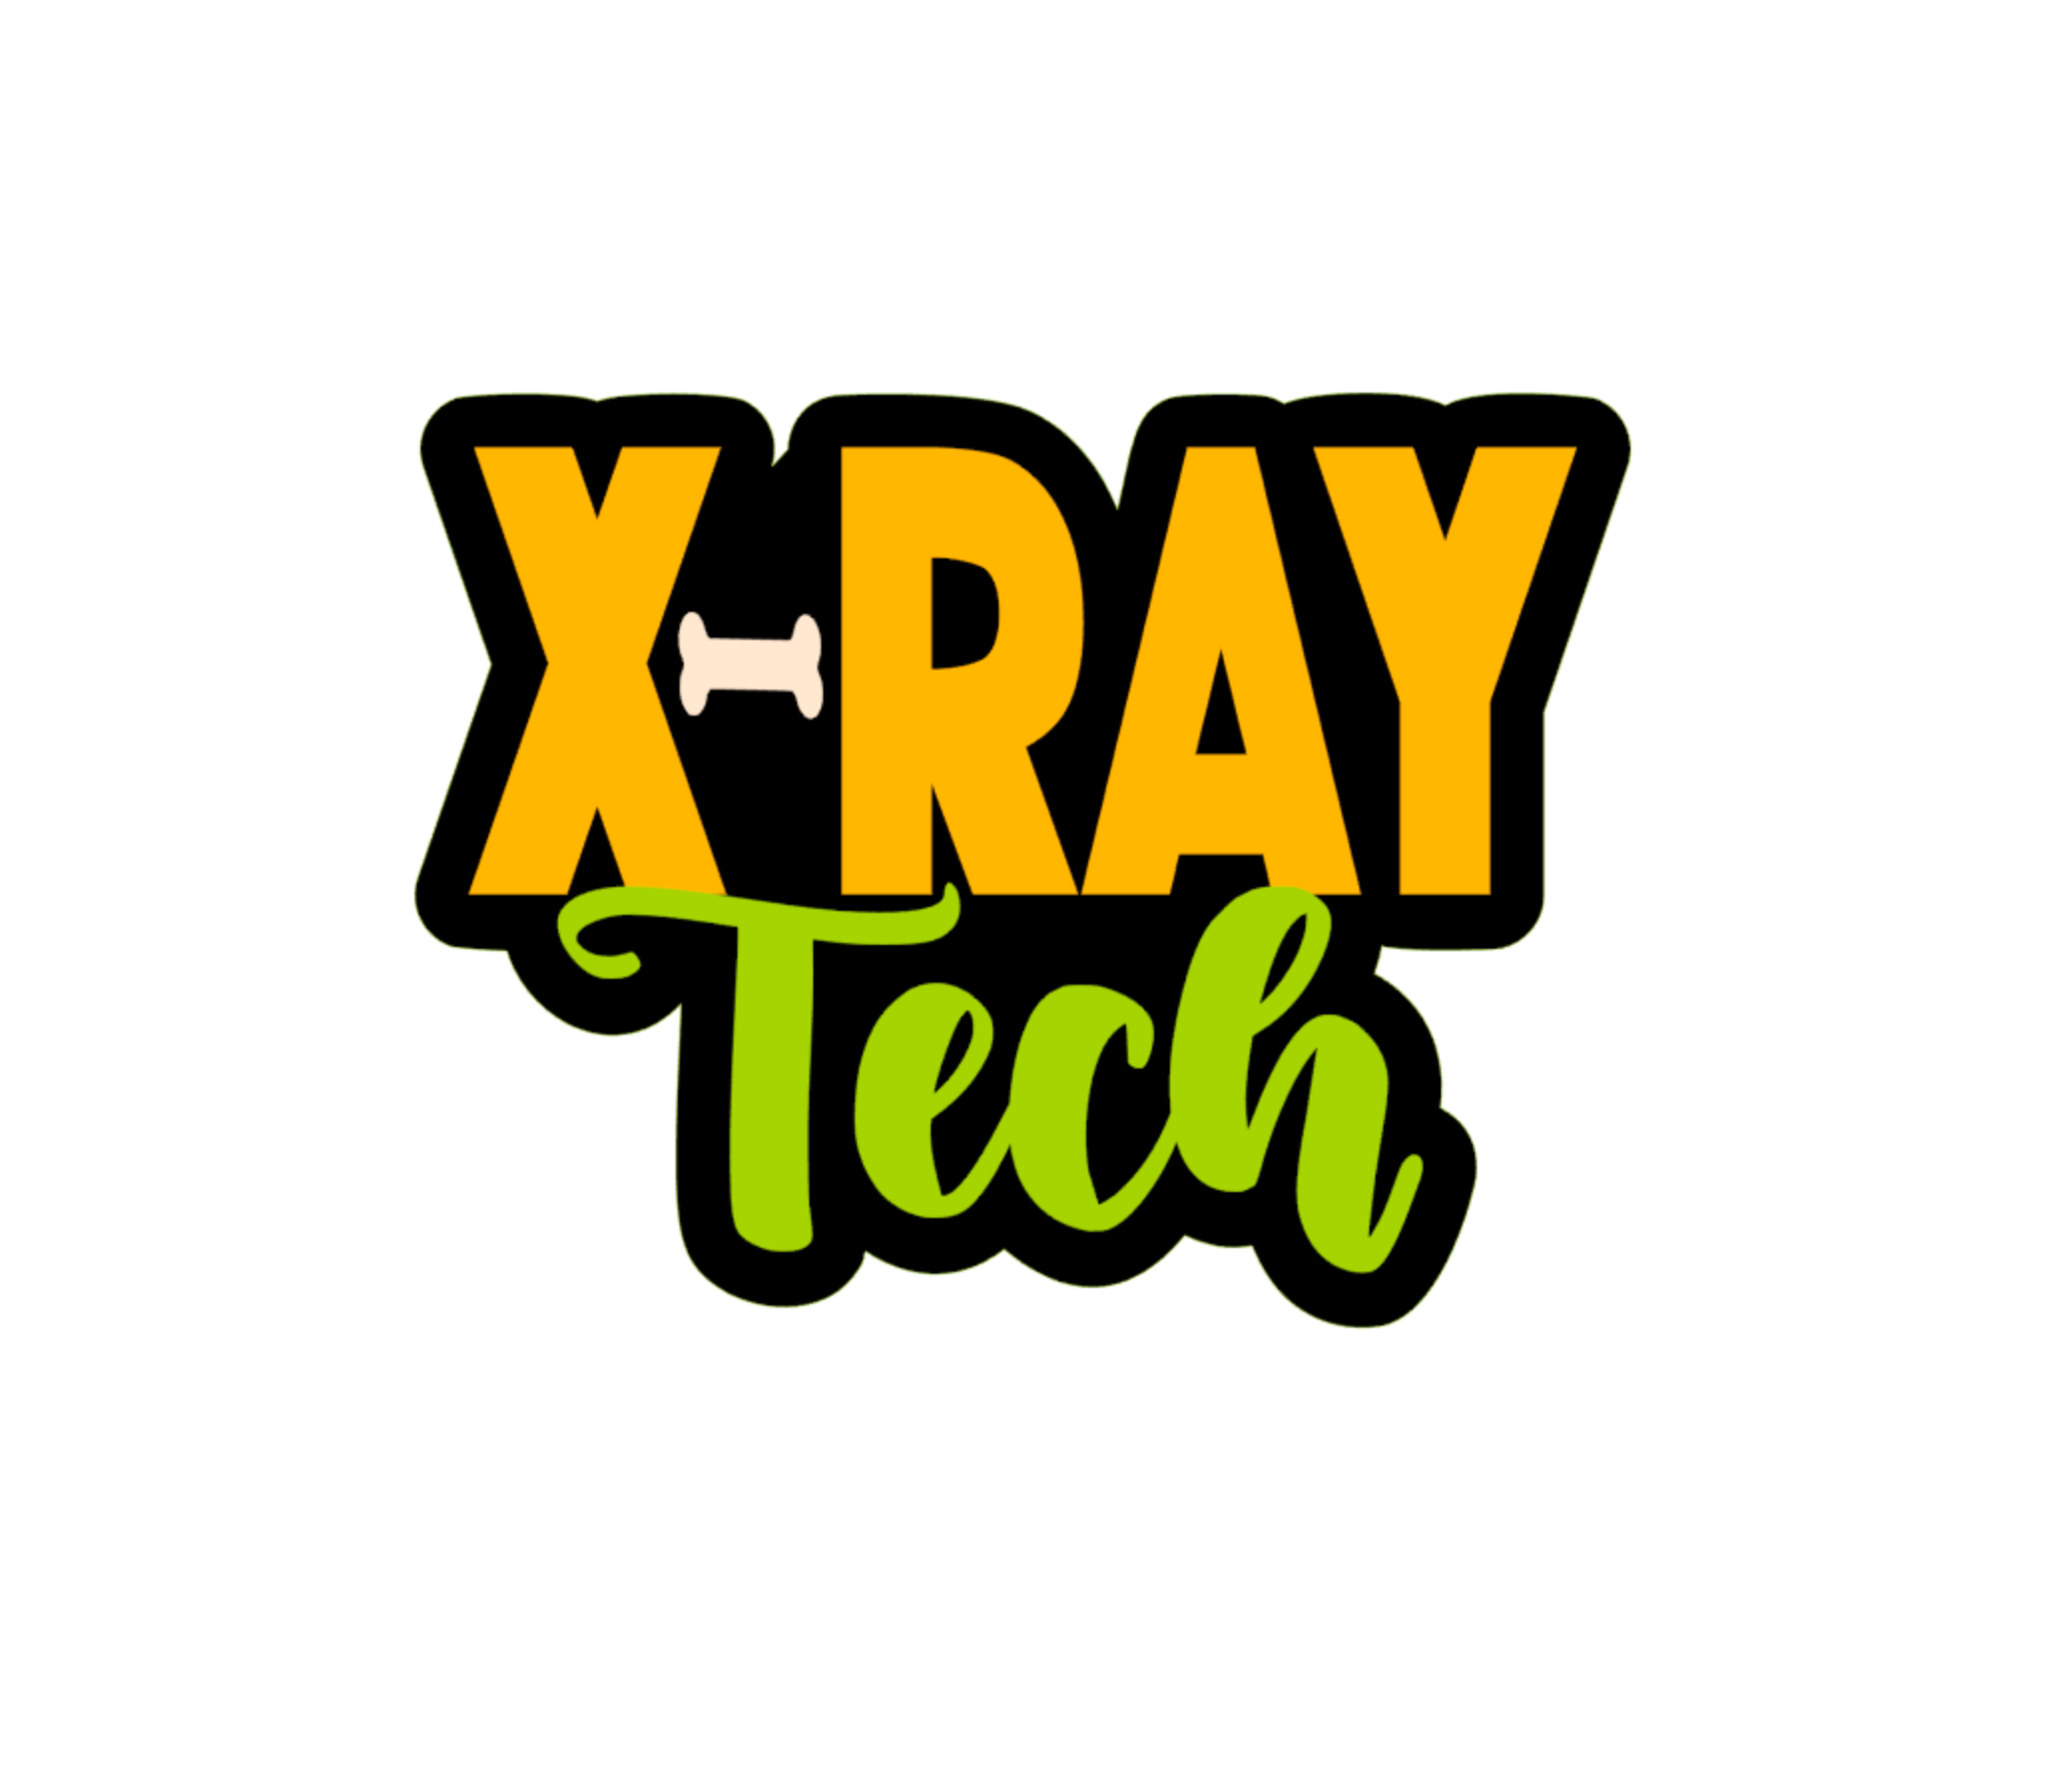 X-ray Badge Reelinterchangeablex-ray Technician Badge Reelradiologymedical  Badge Reelrad Tech Badgeacrylic Badge Reelglitterlanyard 